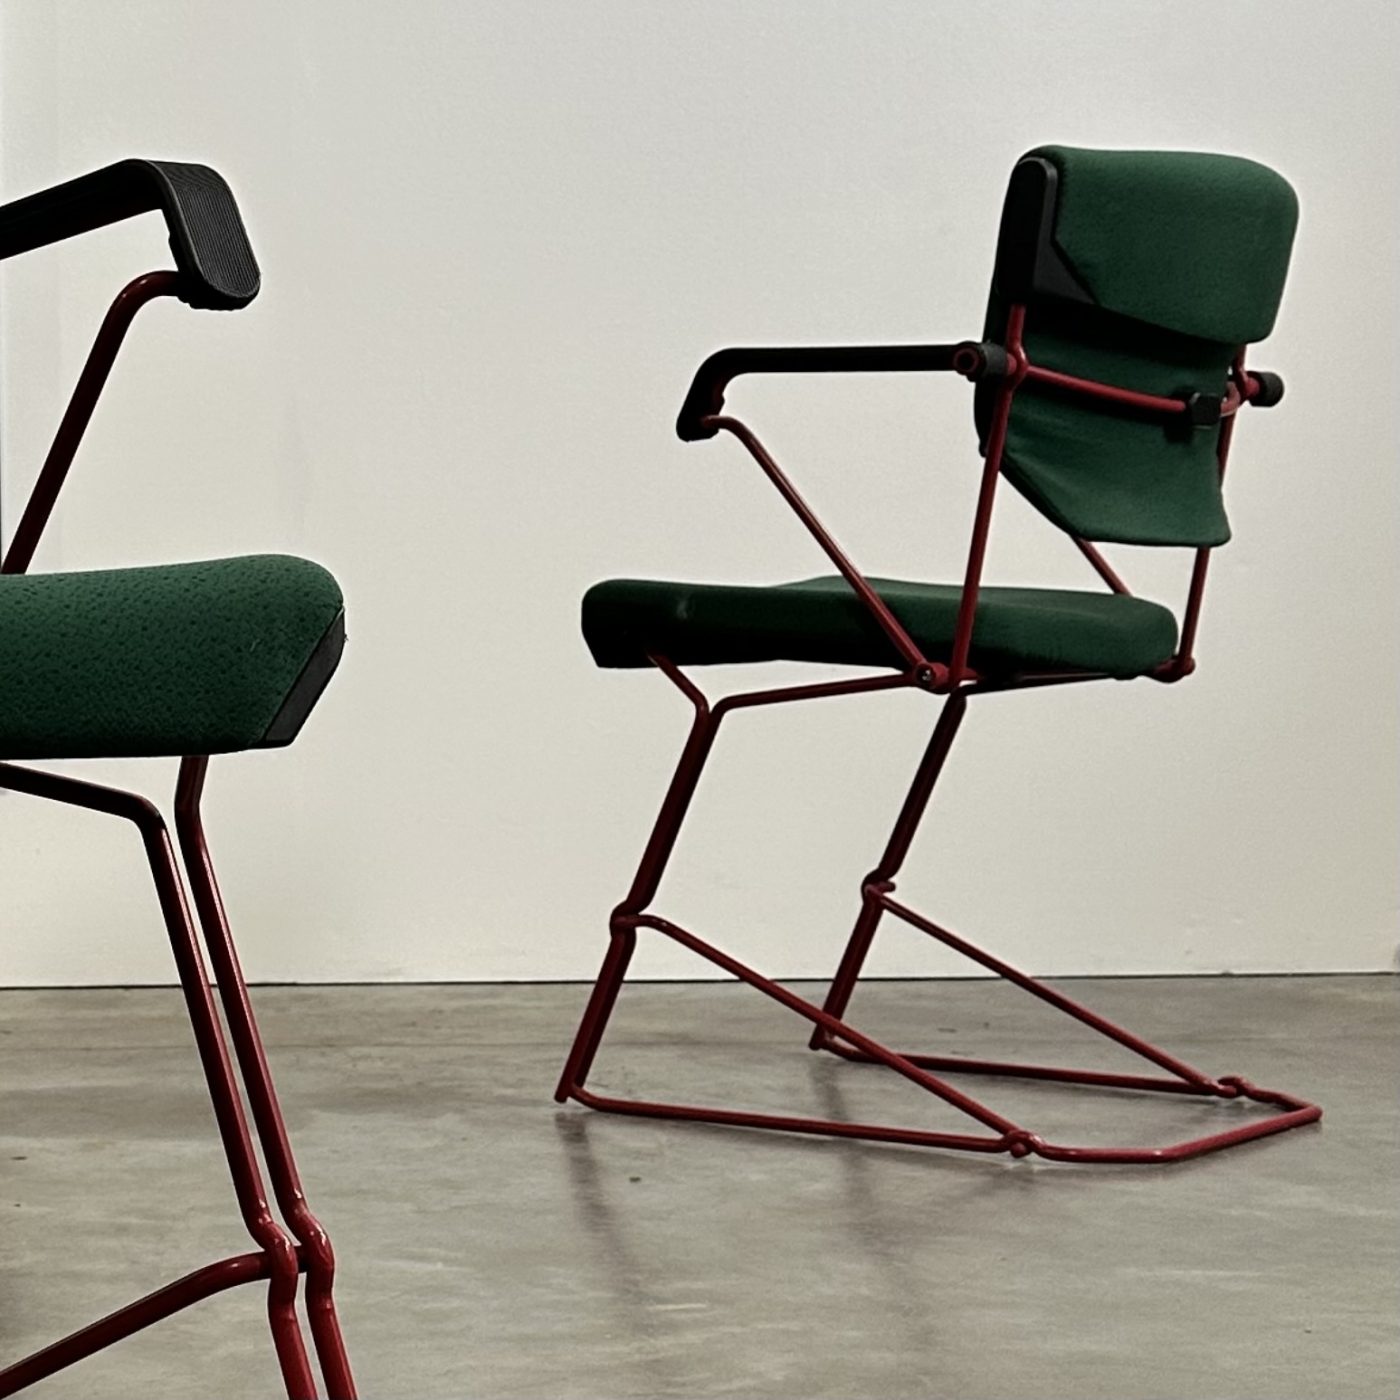 objet-vagabond-design-armchairs0004